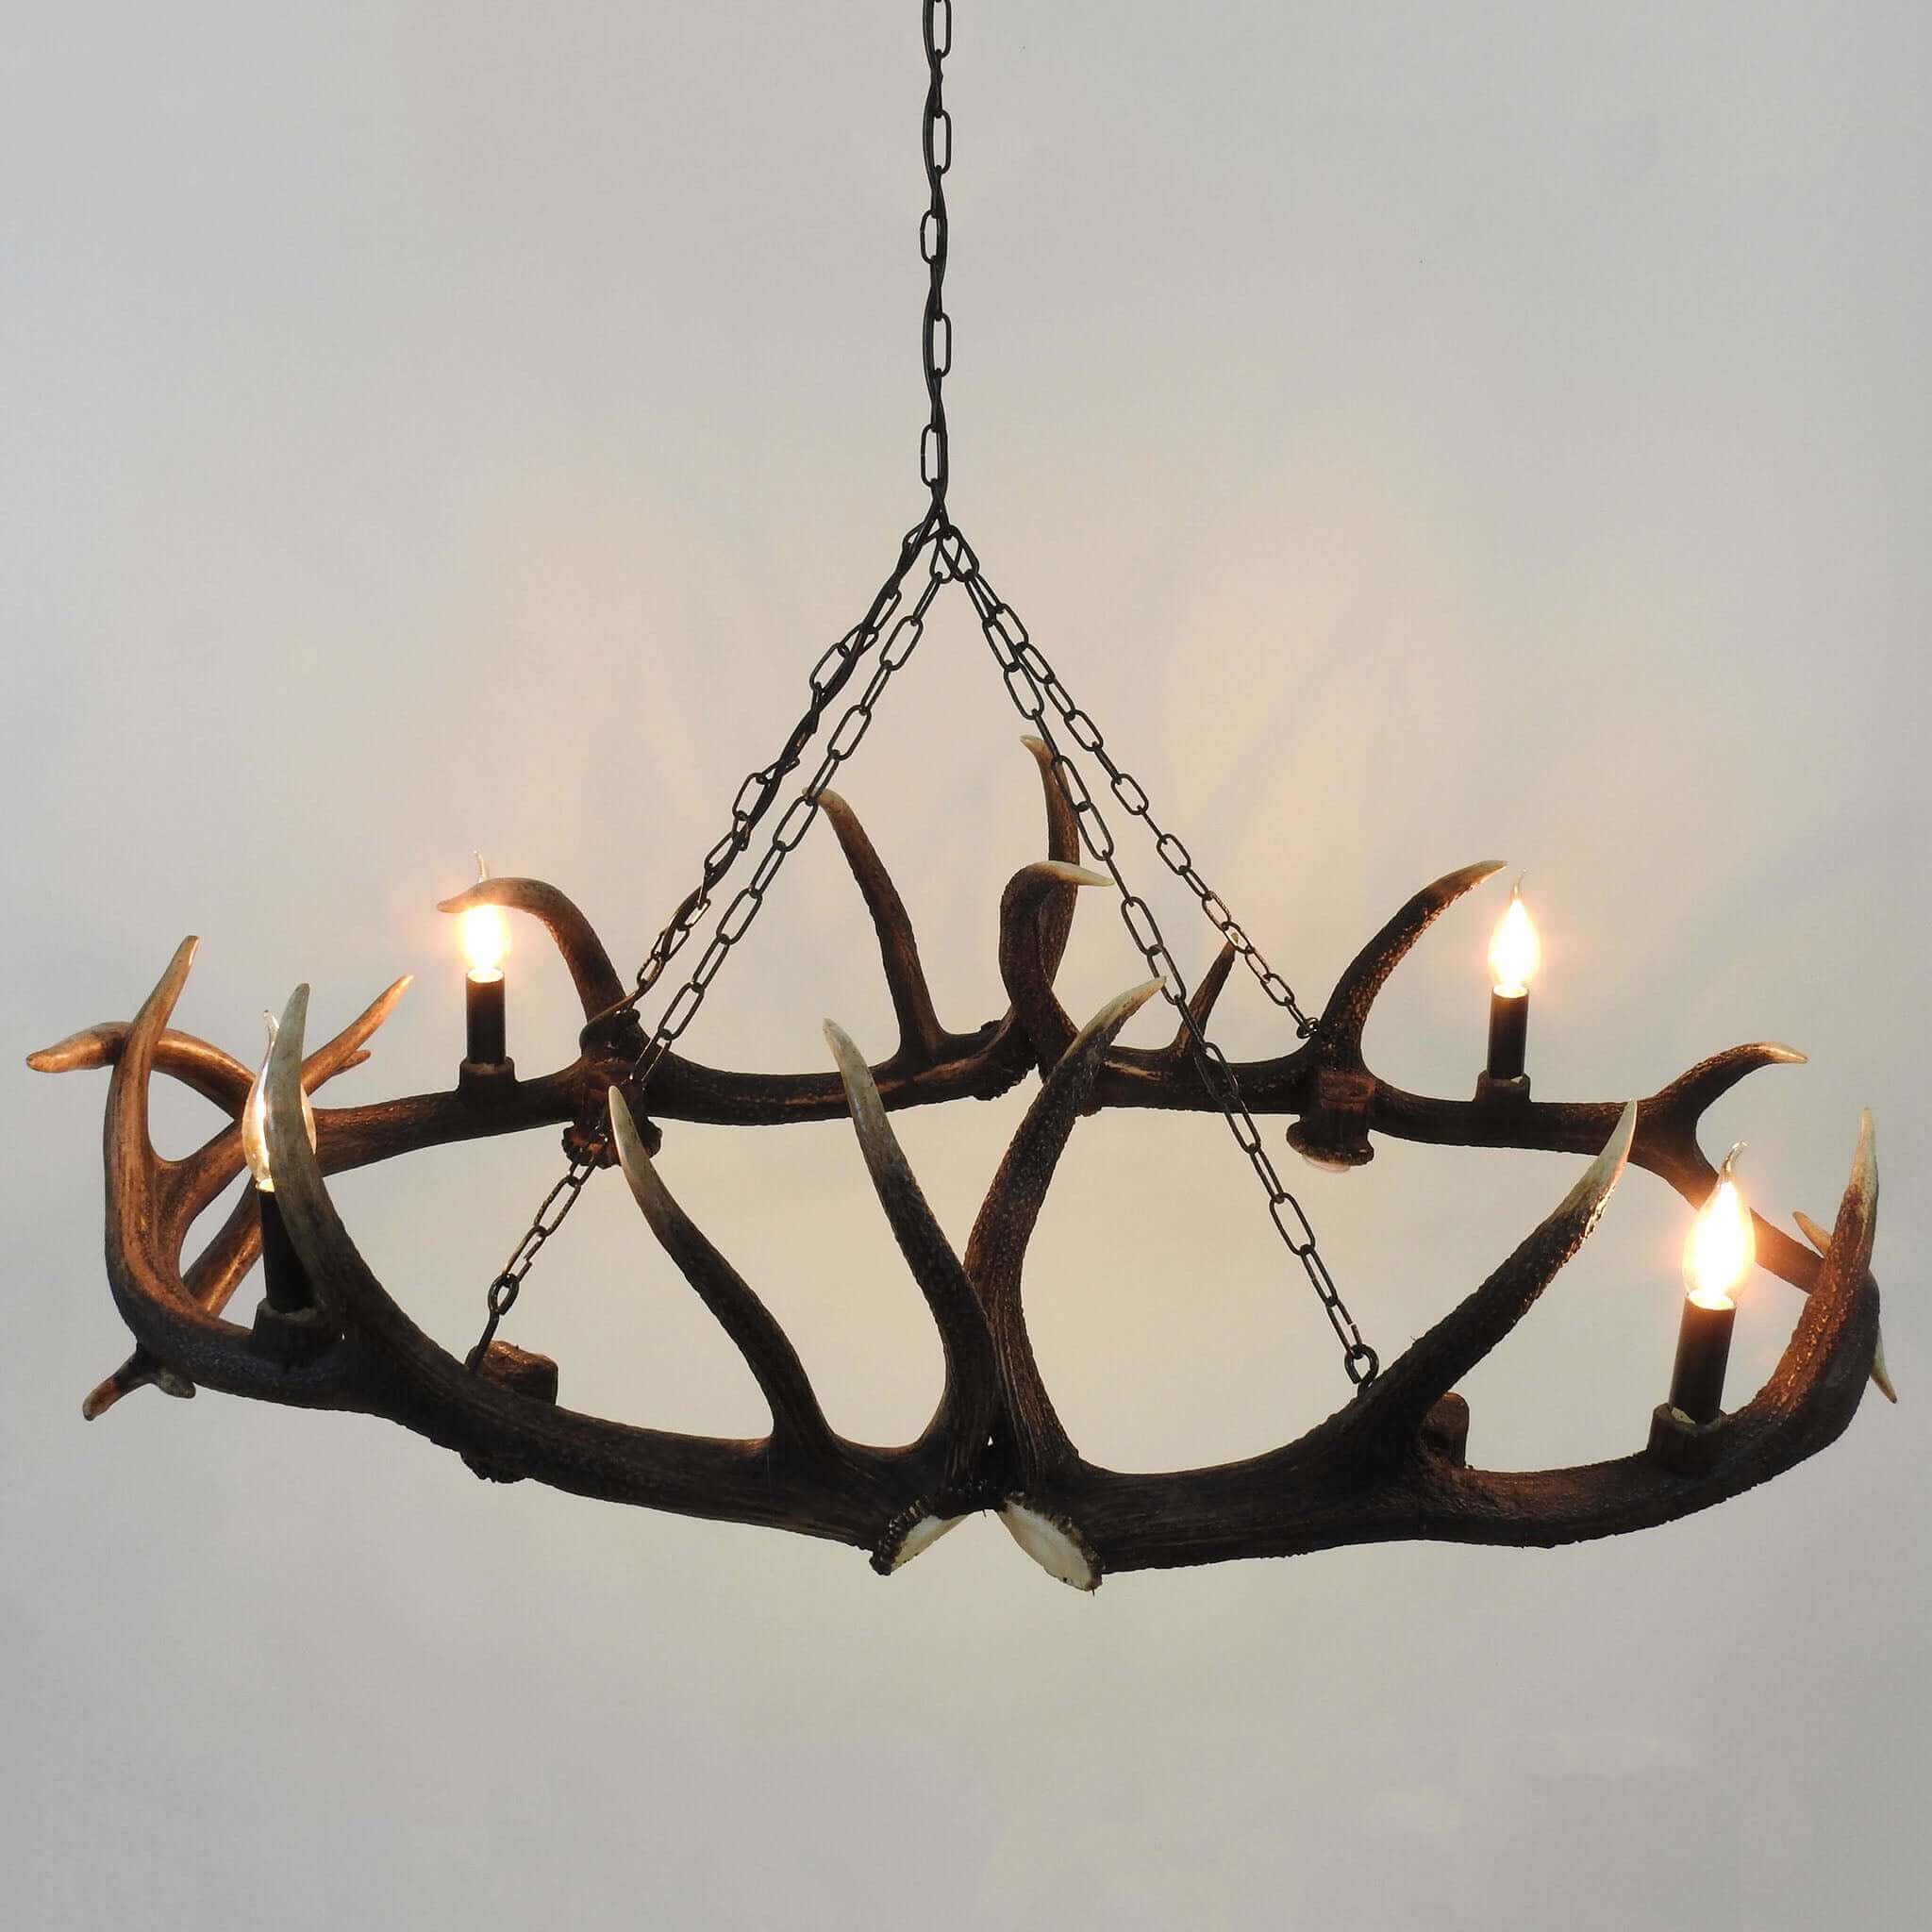 Real deer antler chandelier hanging on chain.